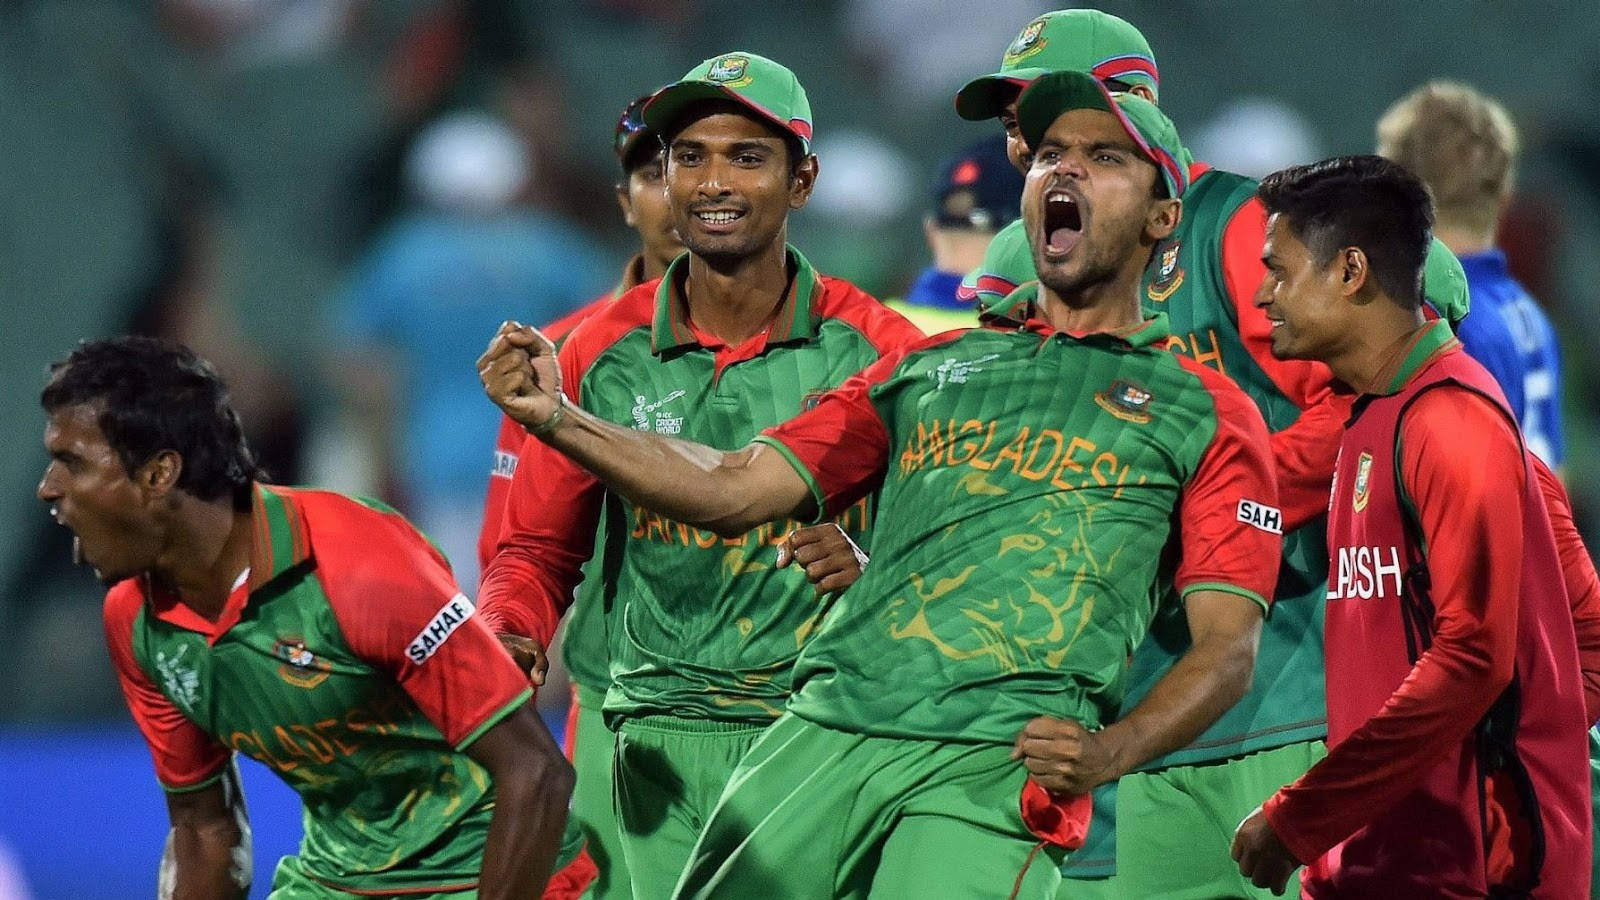 Victoriadel Equipo De Críquet De Bangladesh. Fondo de pantalla